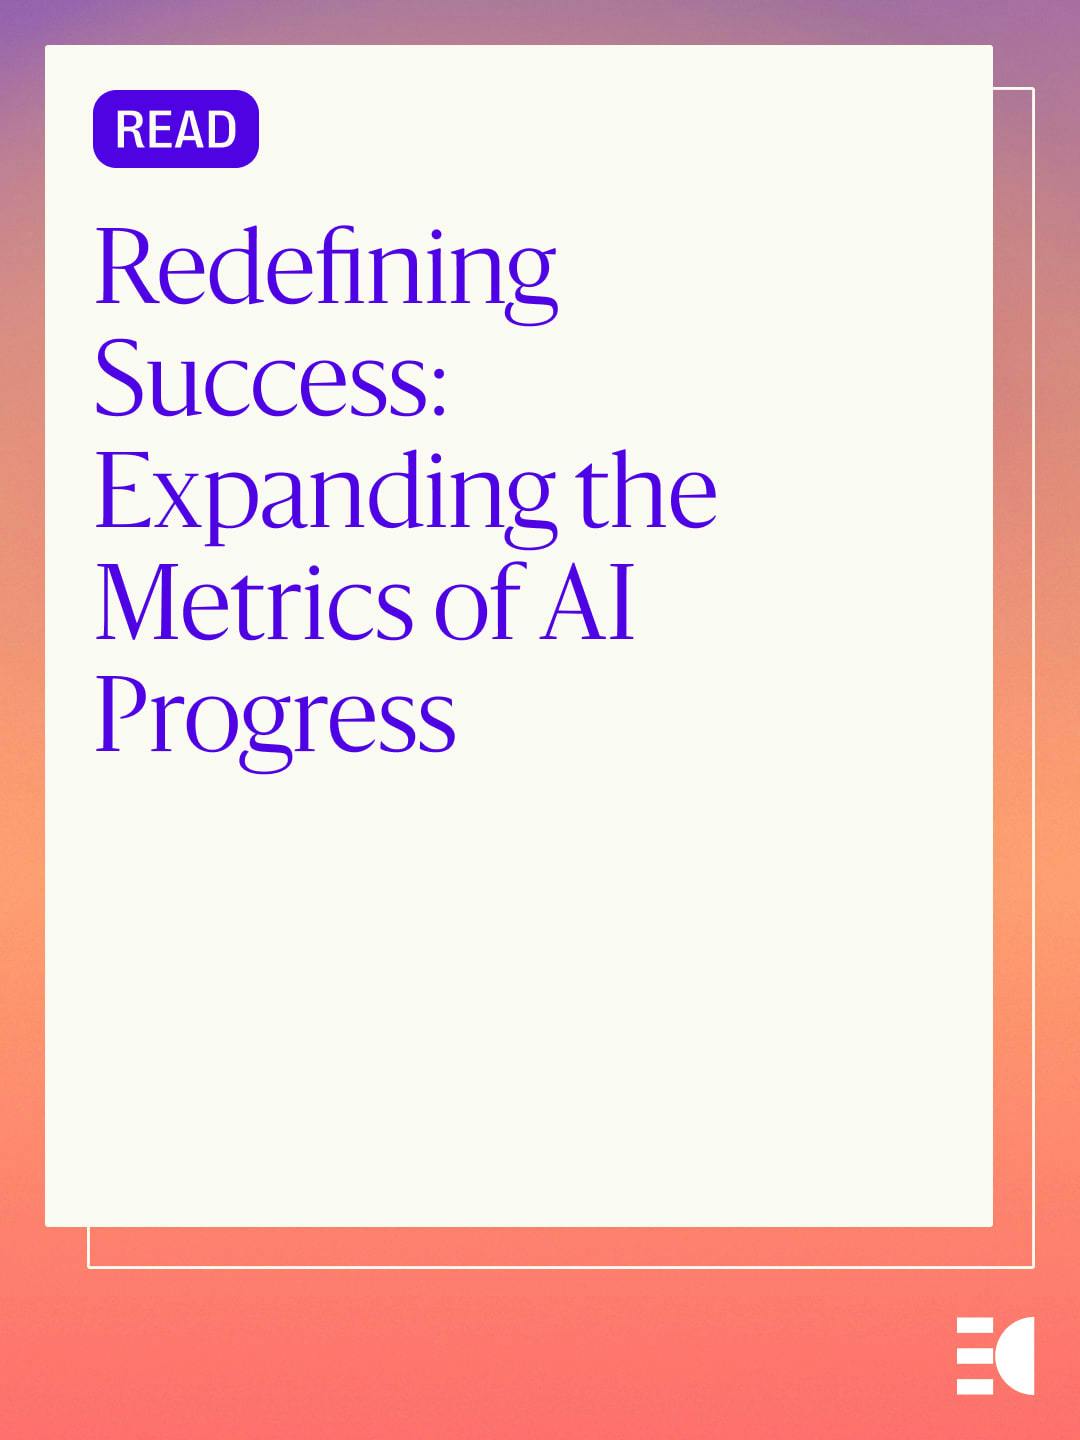 Read: Redefining Success: Expanding the Metrics of AI Progress